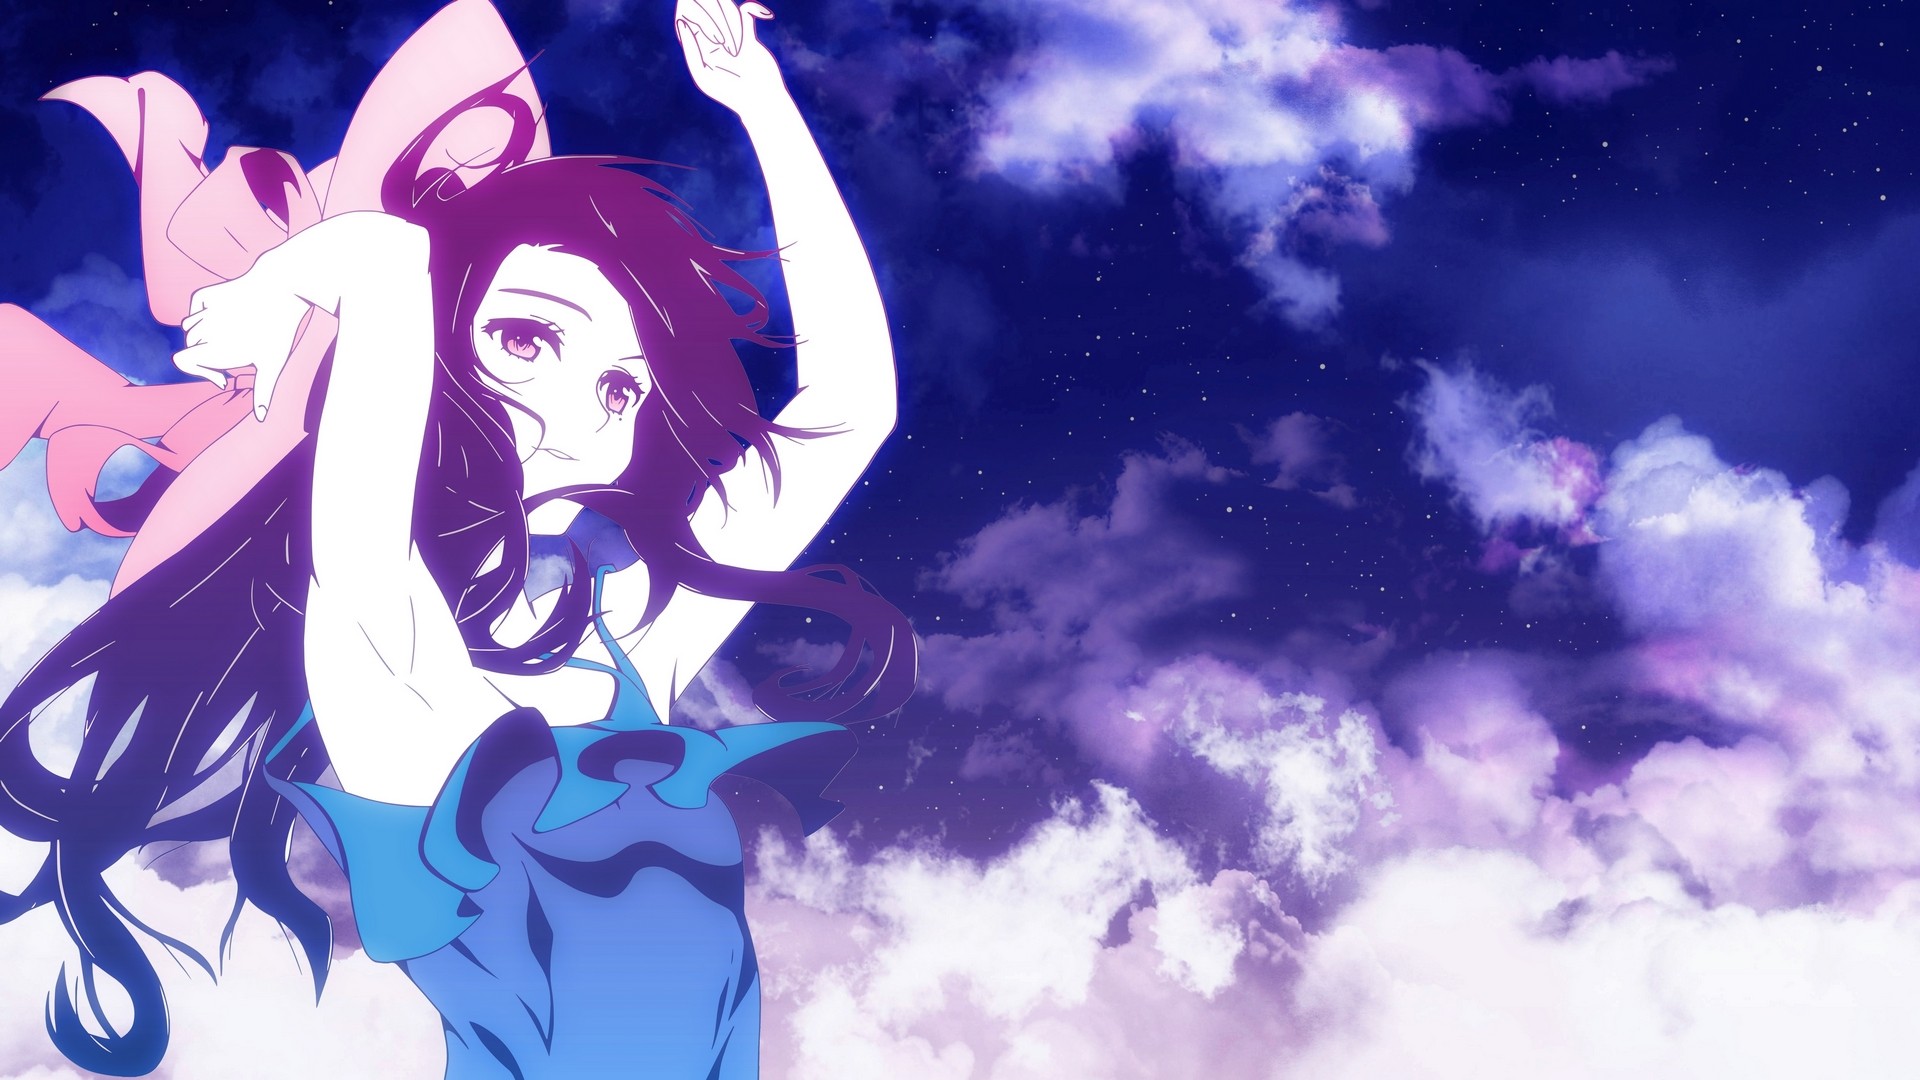 Anime 1920x1080 Haruka purple hair long hair arms up sky anime girls anime